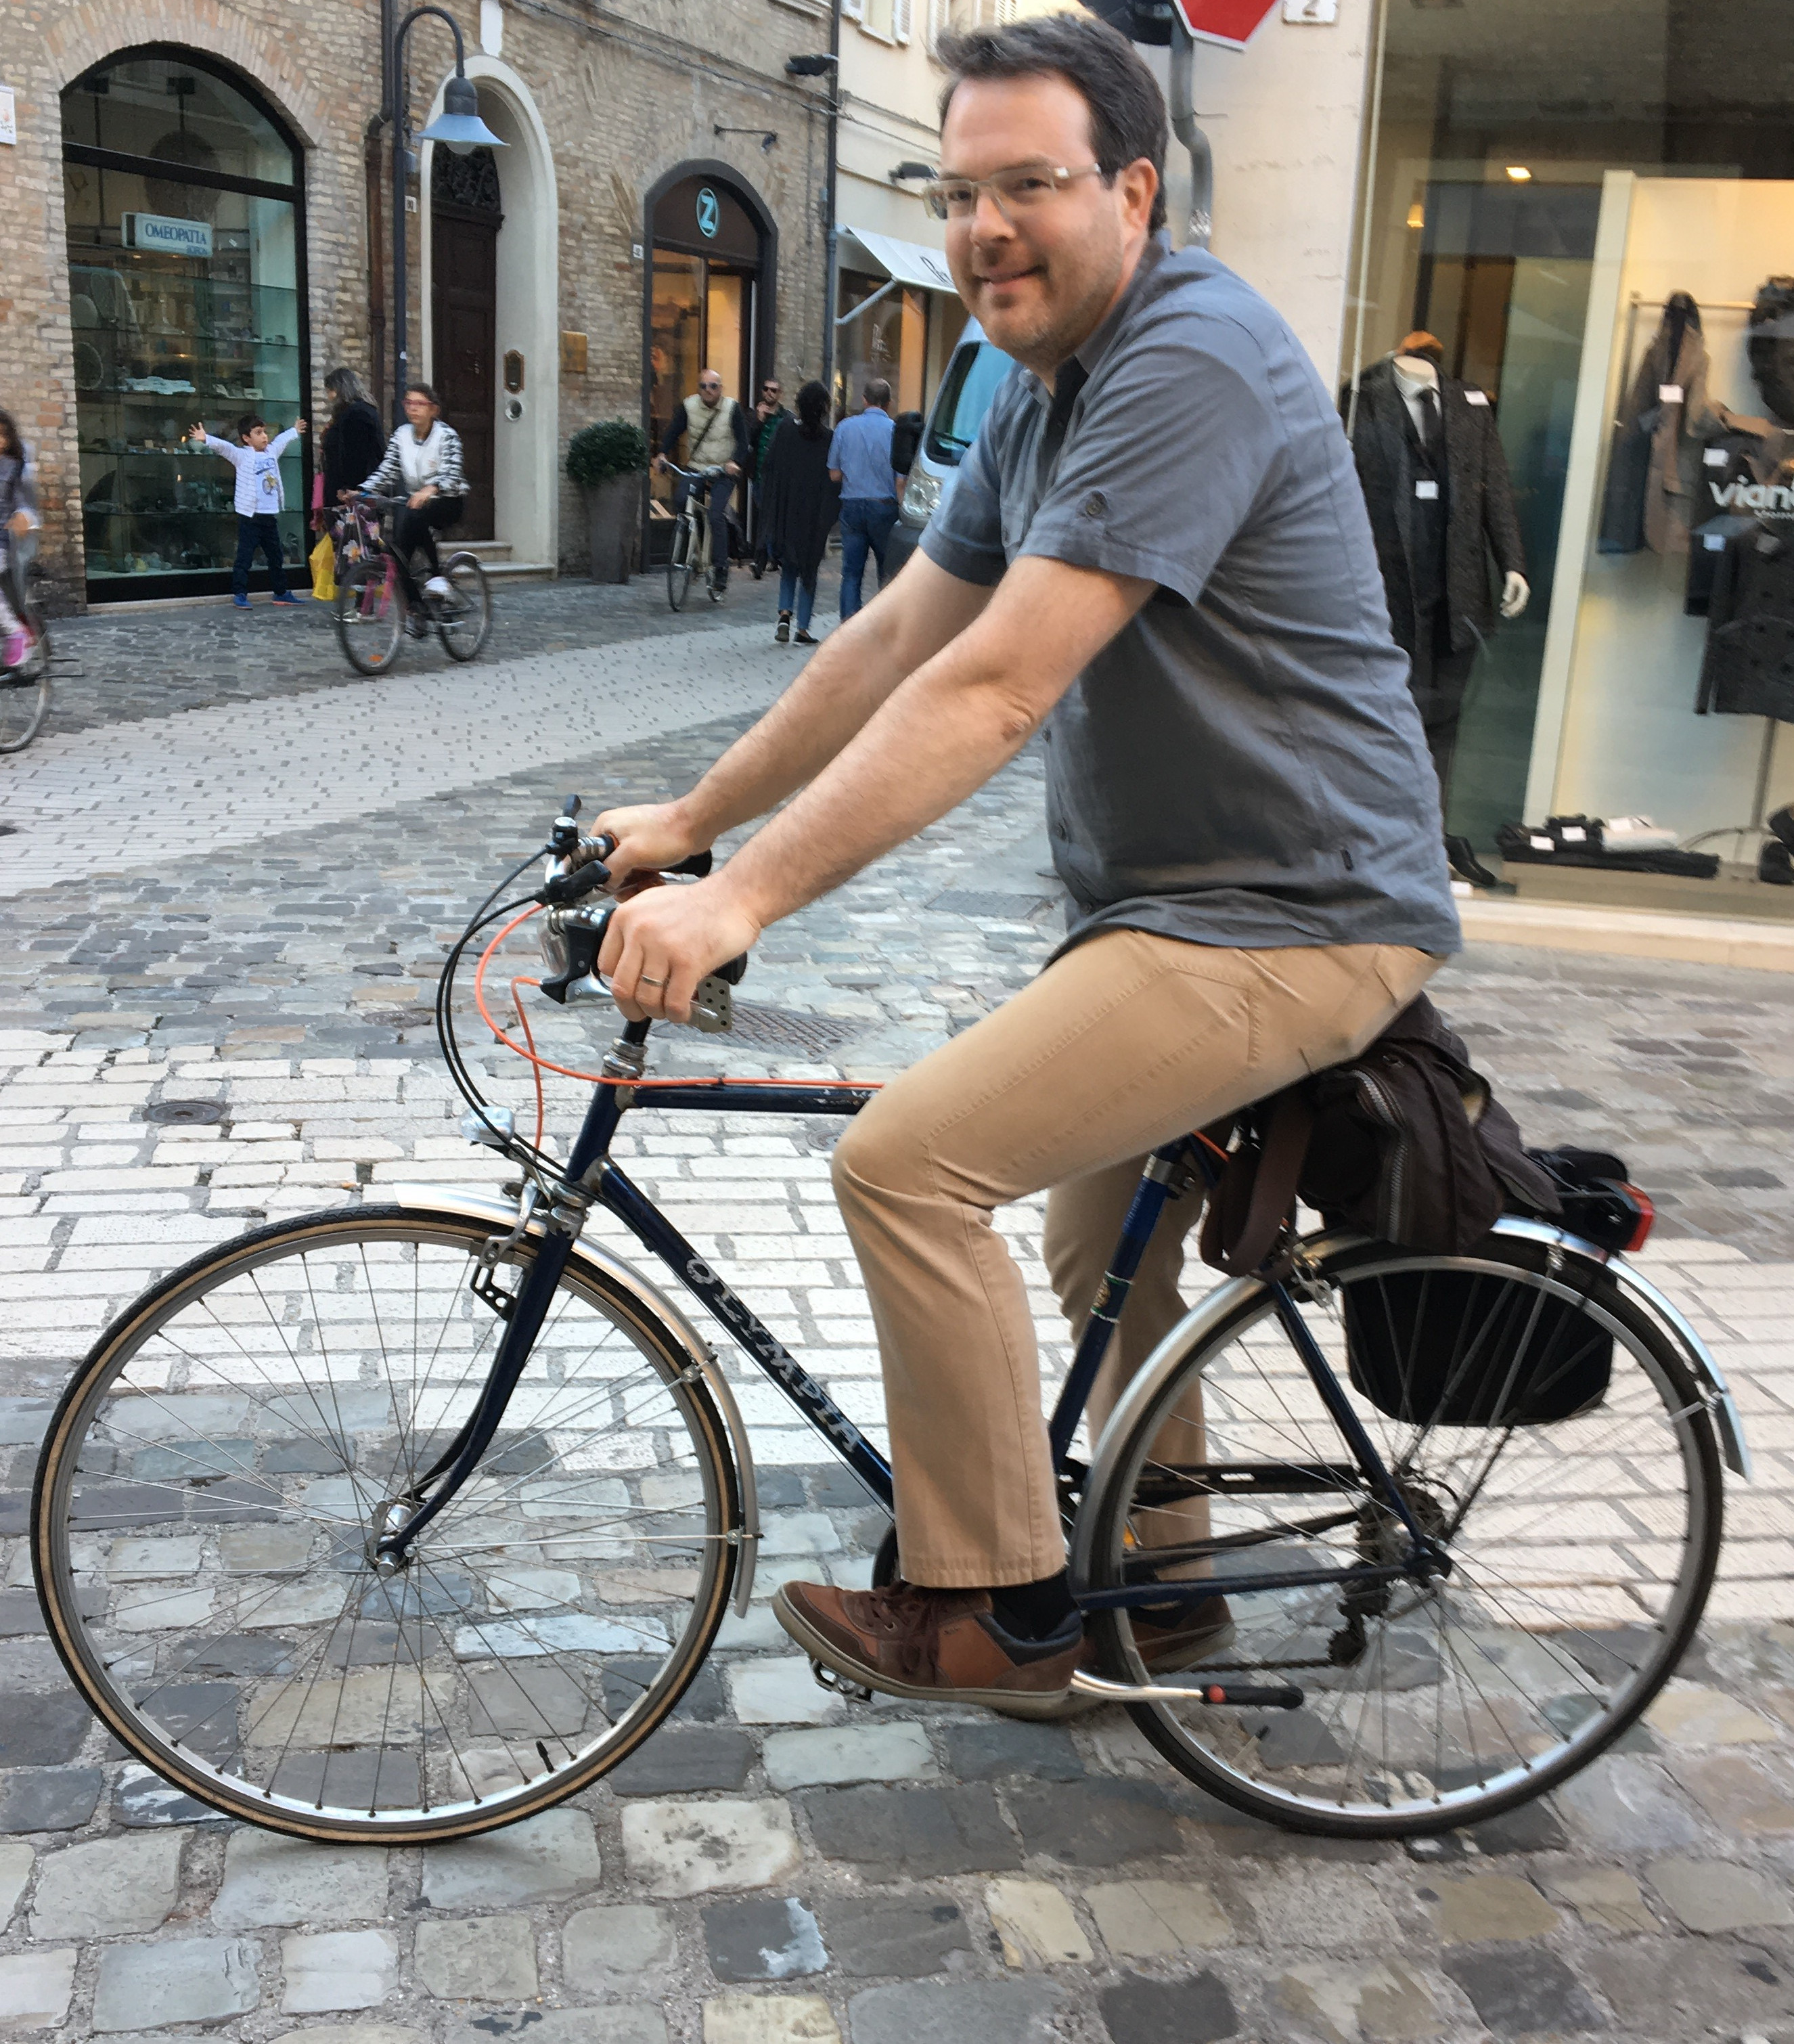 John riding his bike in Ravenna